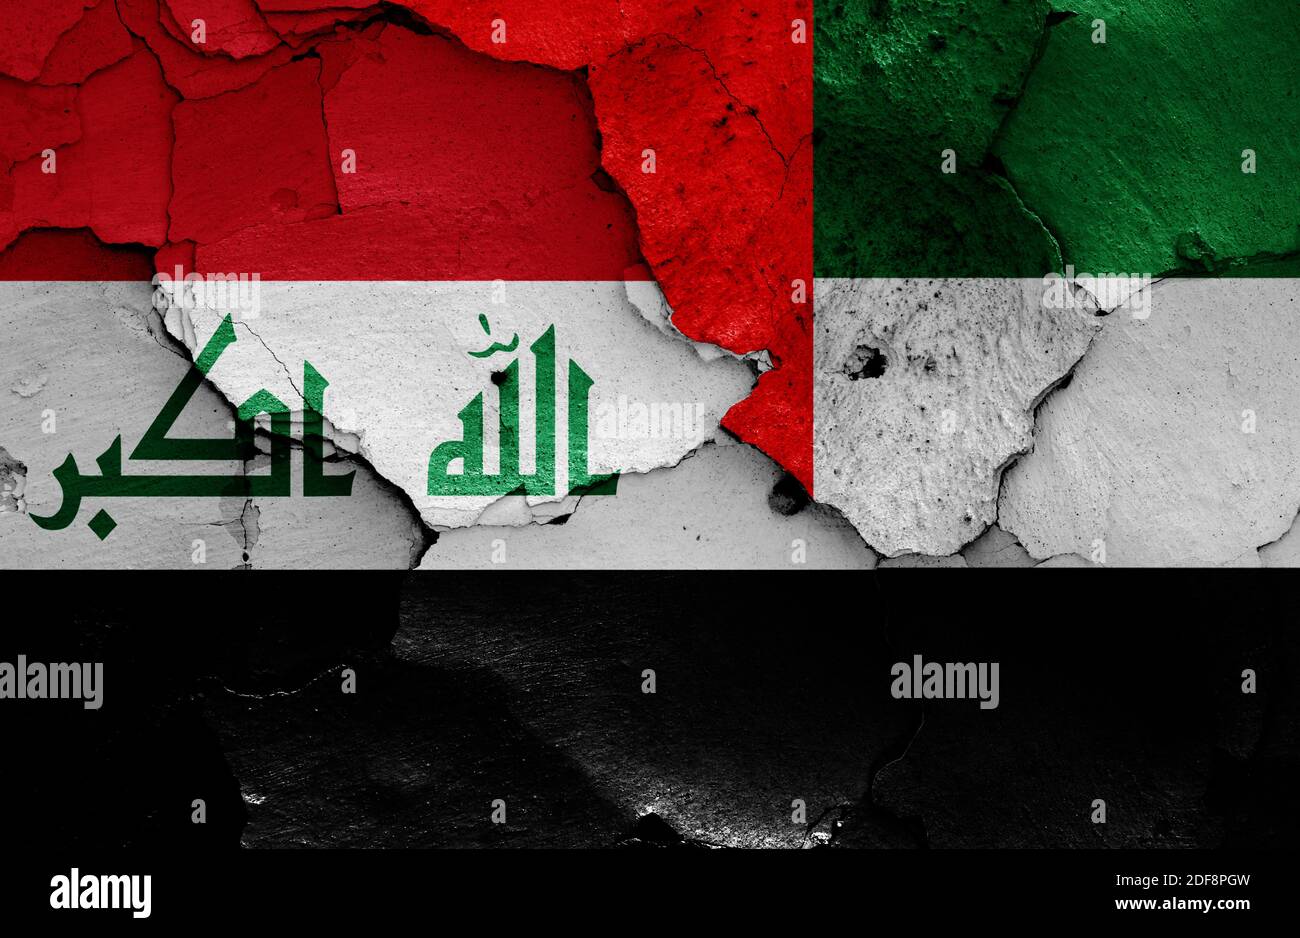 Emirate irak flagge -Fotos und -Bildmaterial in hoher Auflösung